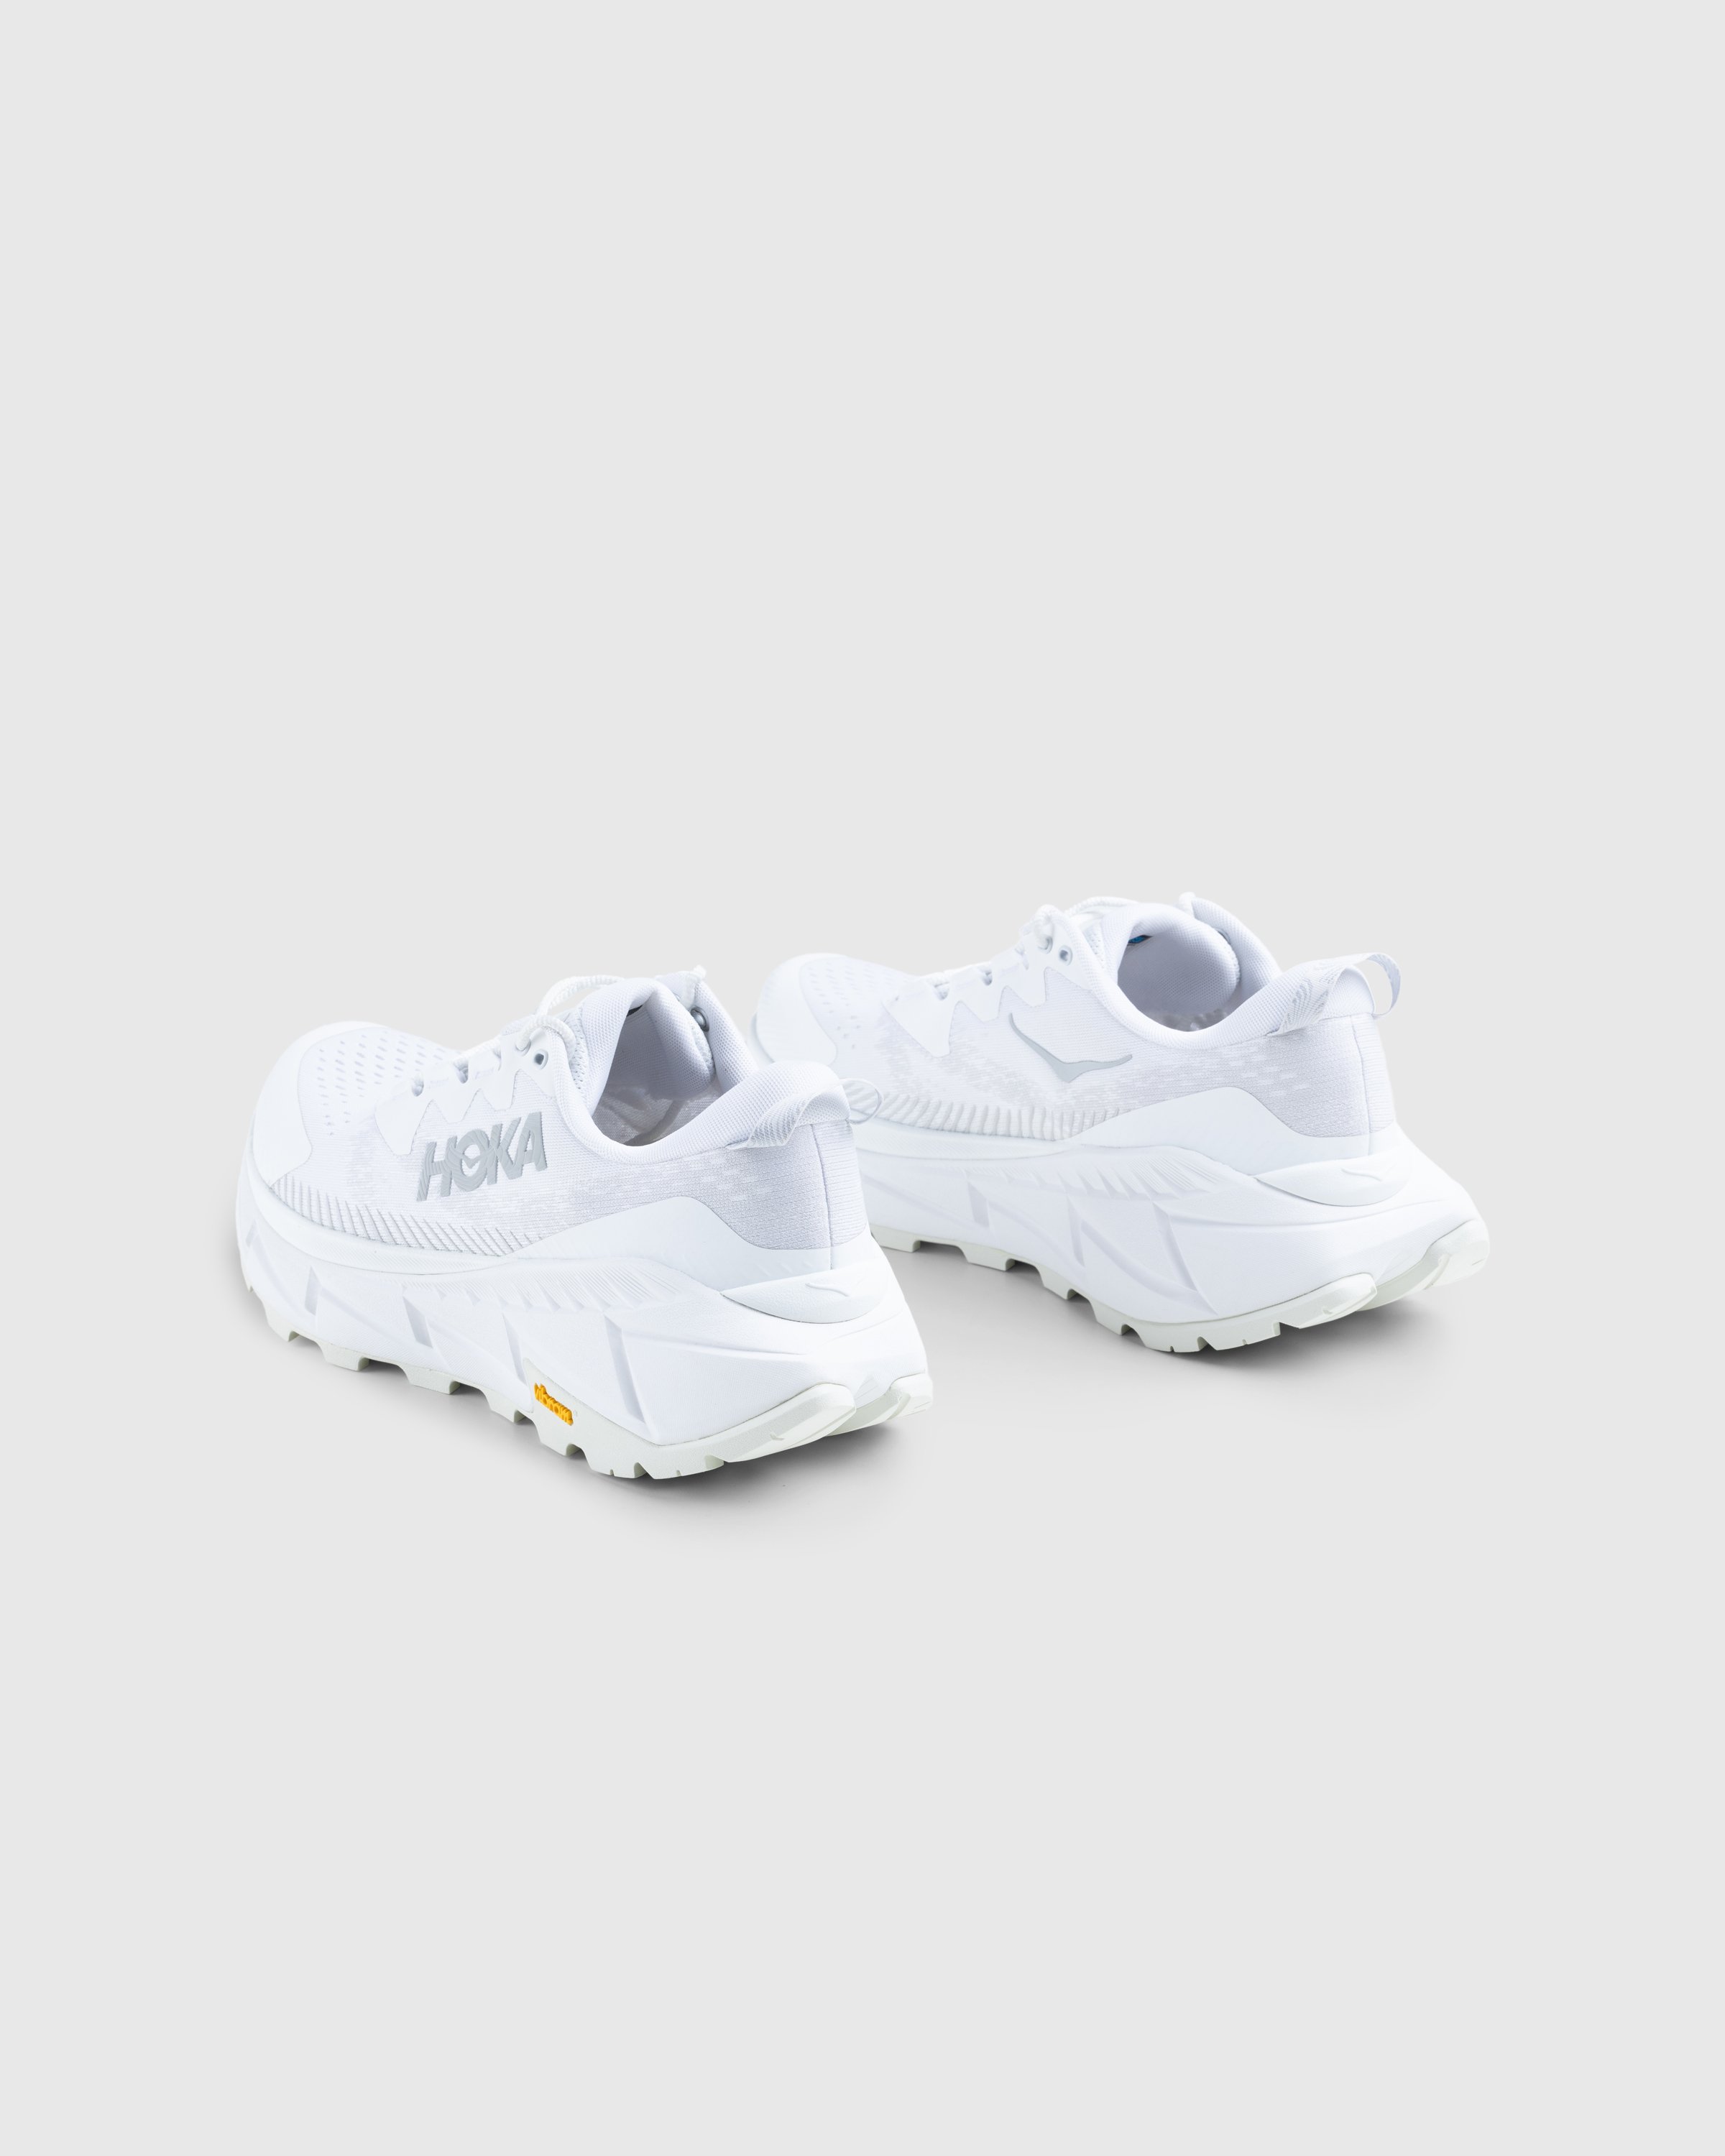 HOKA - Skyline-Float X White - Footwear - White - Image 4